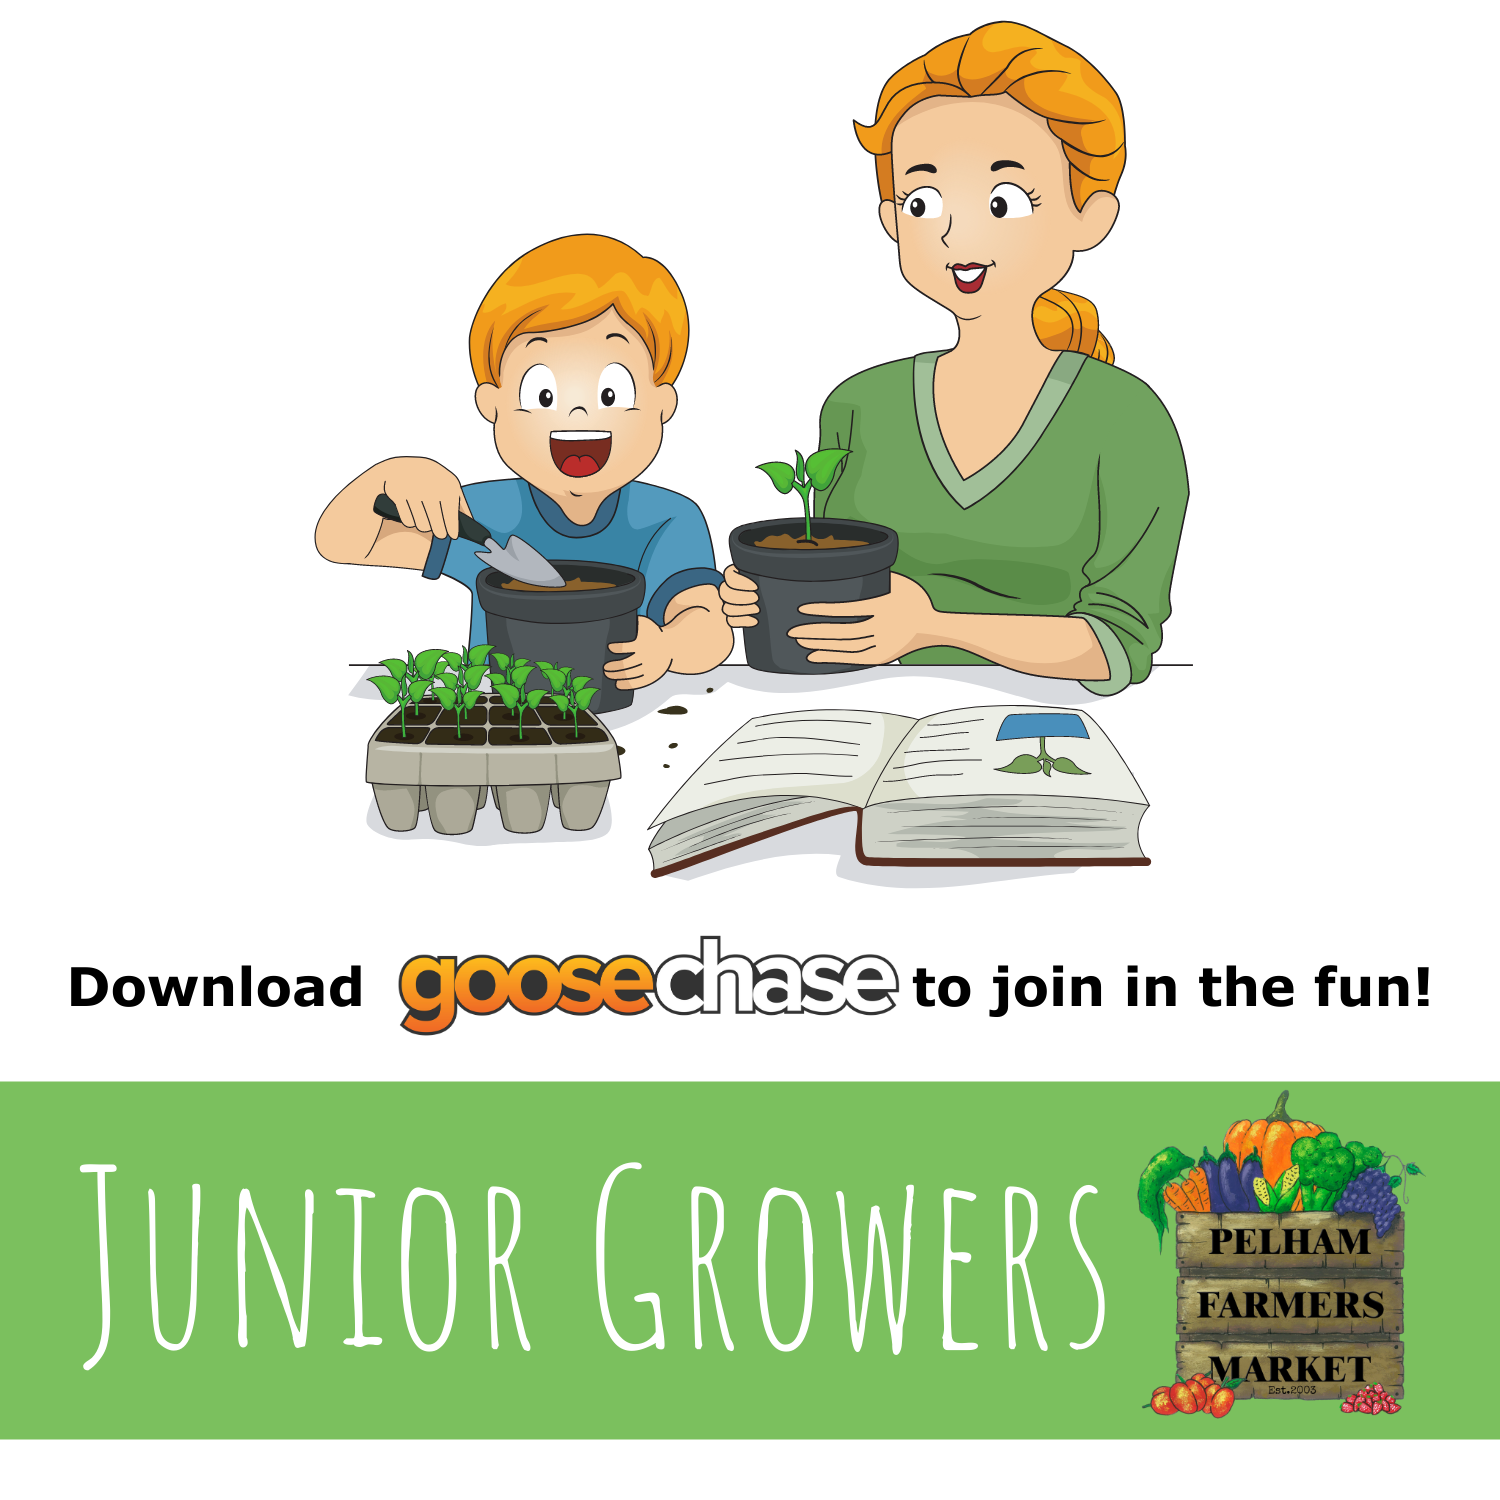 Farmers Market Junior Growers